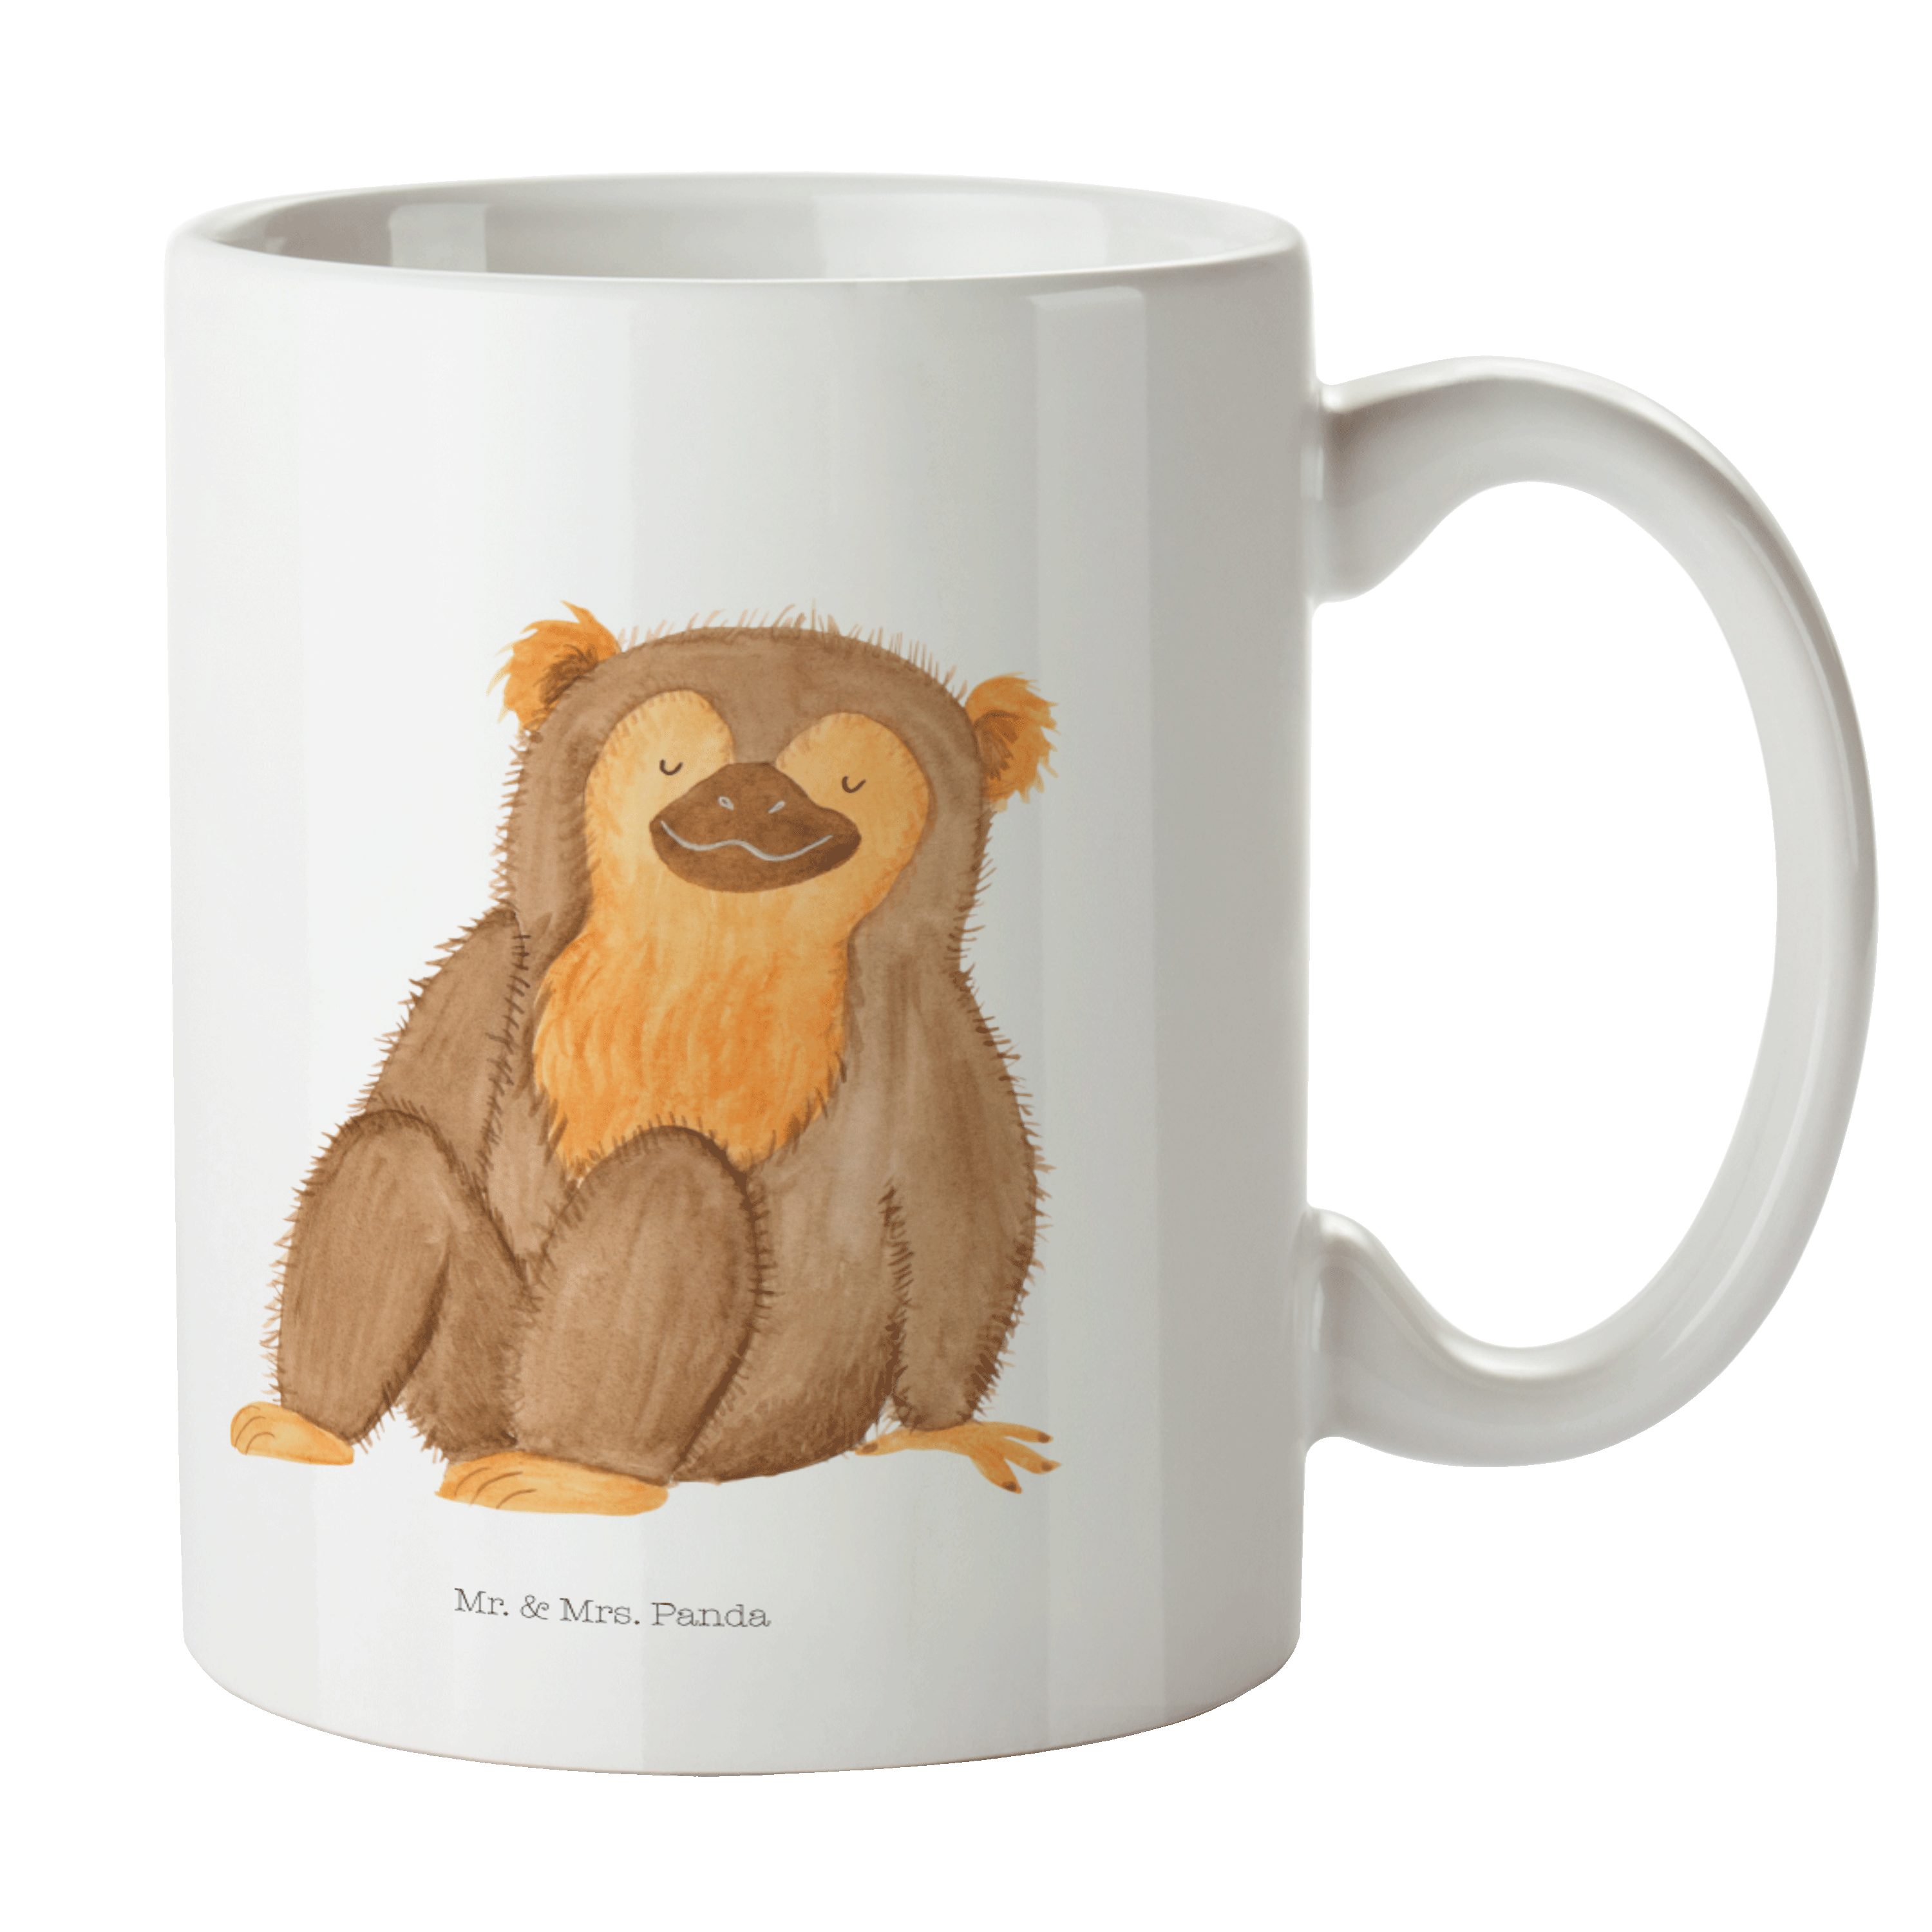 Mr. & Mrs. Panda Tasse Affe - Weiß - Geschenk, Tasse, Affen, Büro Tasse, Becher, Selbstachtu, Keramik | Tassen